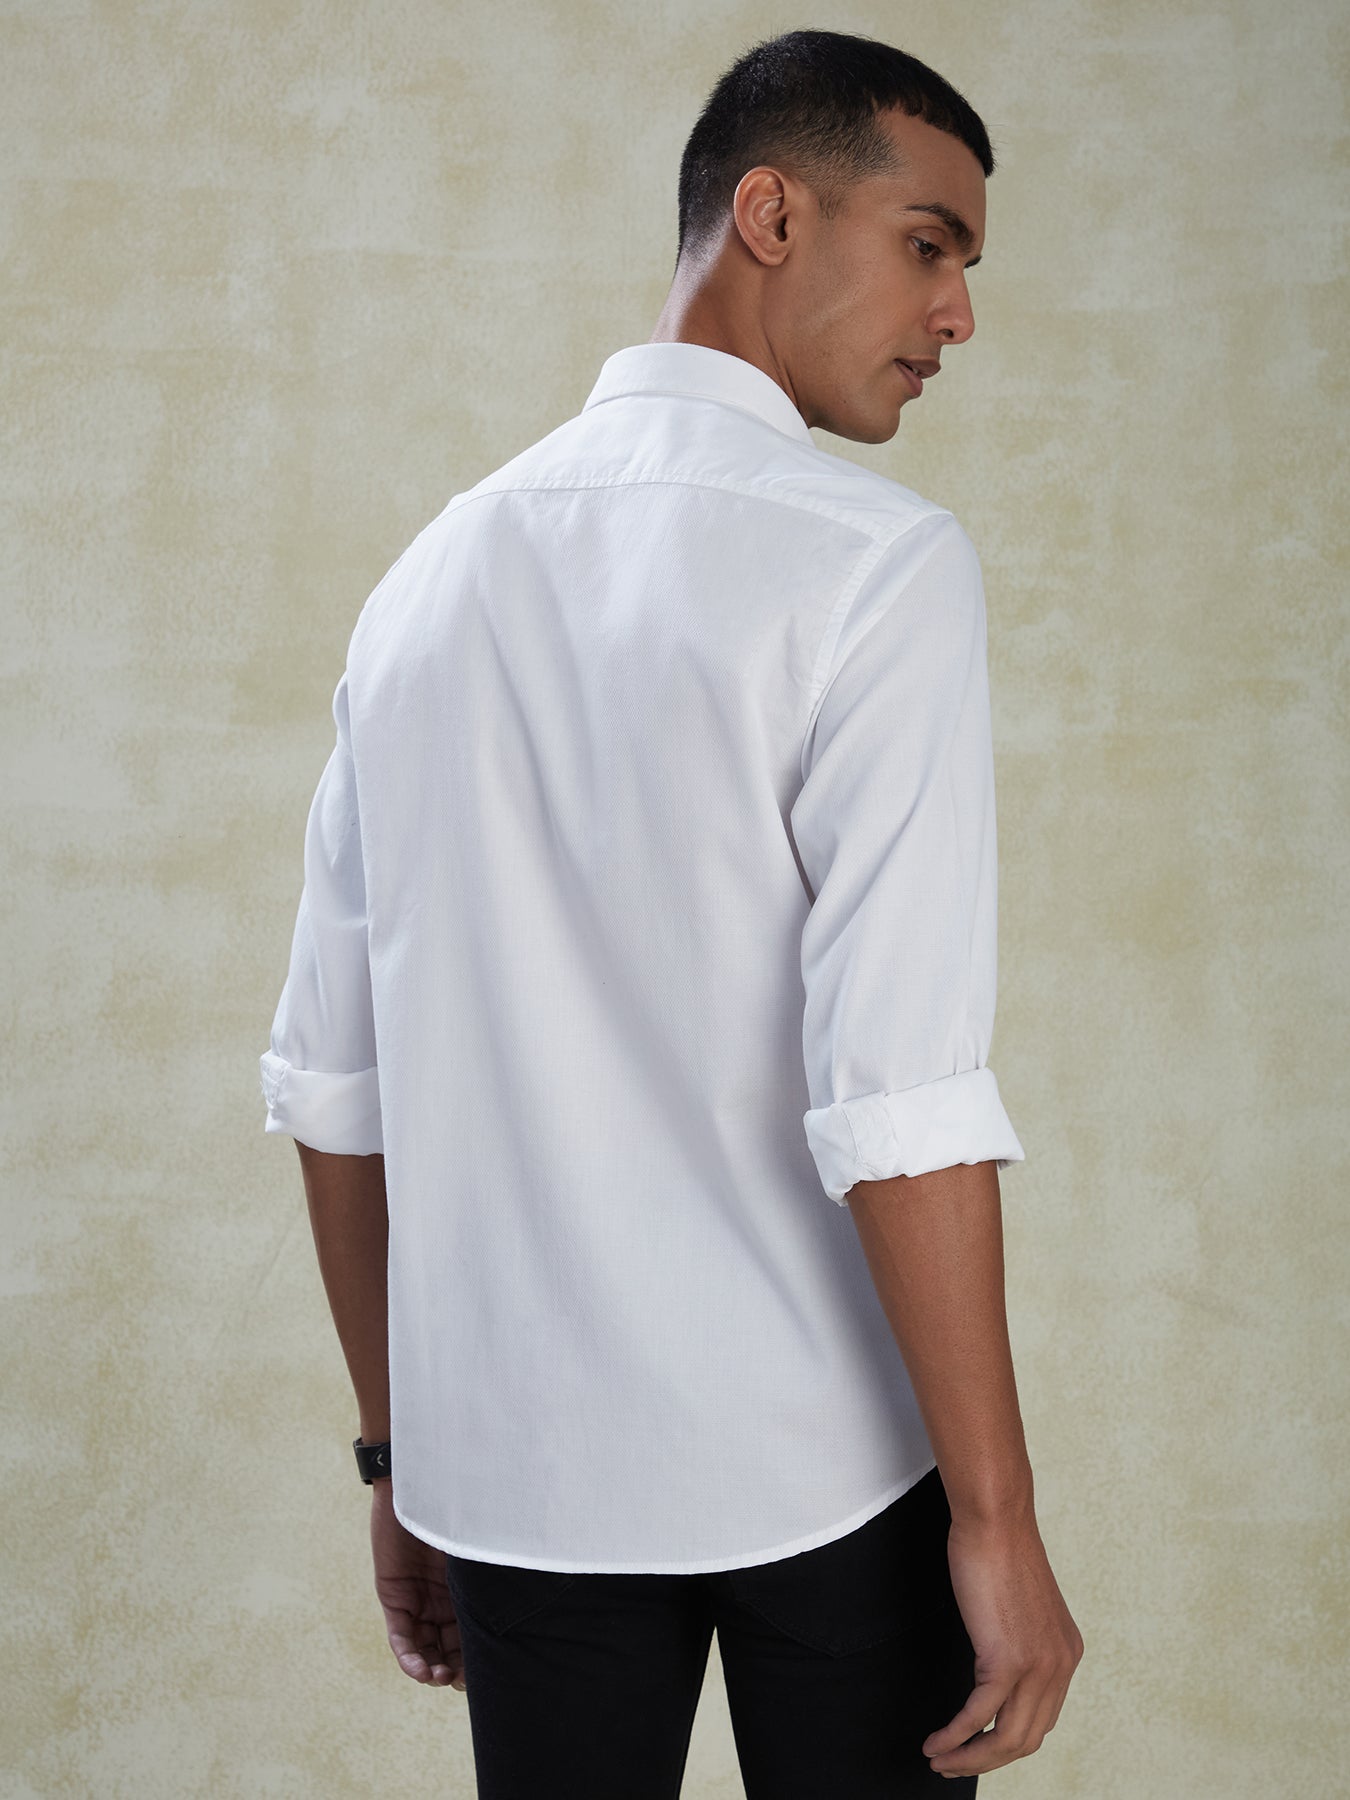 100% Cotton White Dobby Slim Fit Full Sleeve Casual Shirt